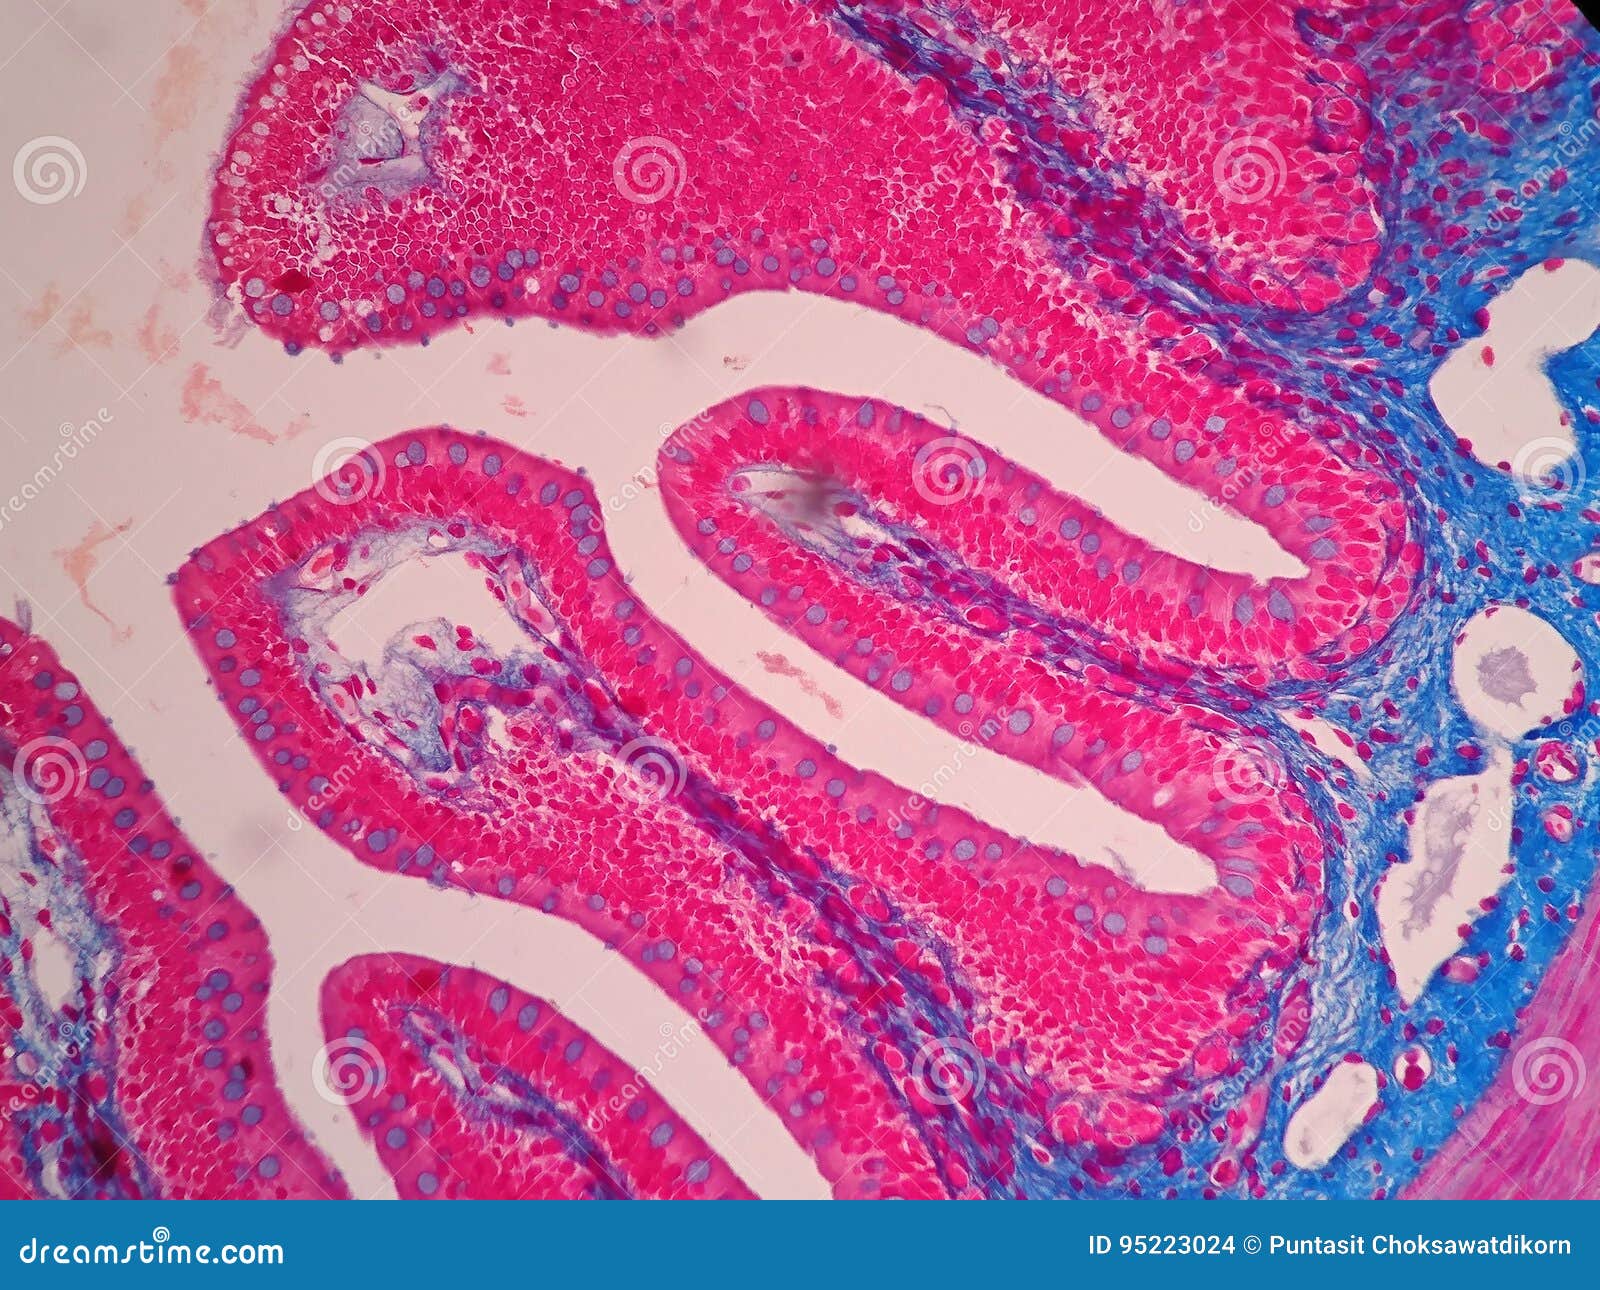 histology of human intestine tissue